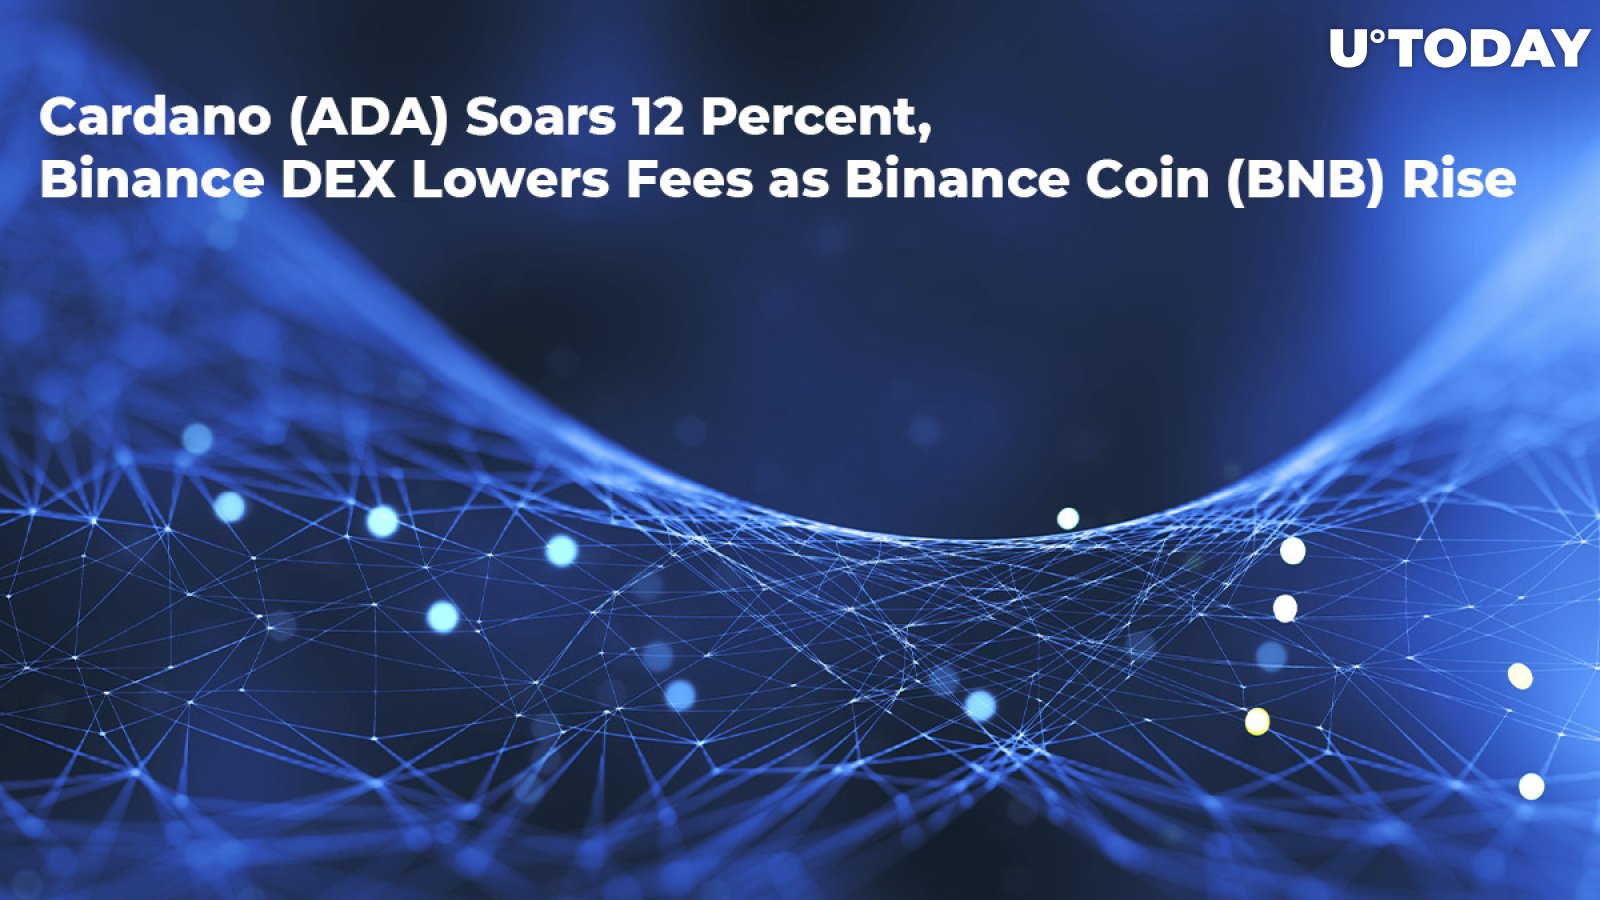 Cardano (ADA) Soars 12 Percent, Binance DEX Lowers Fees as Binance Coin (BNB) Rises